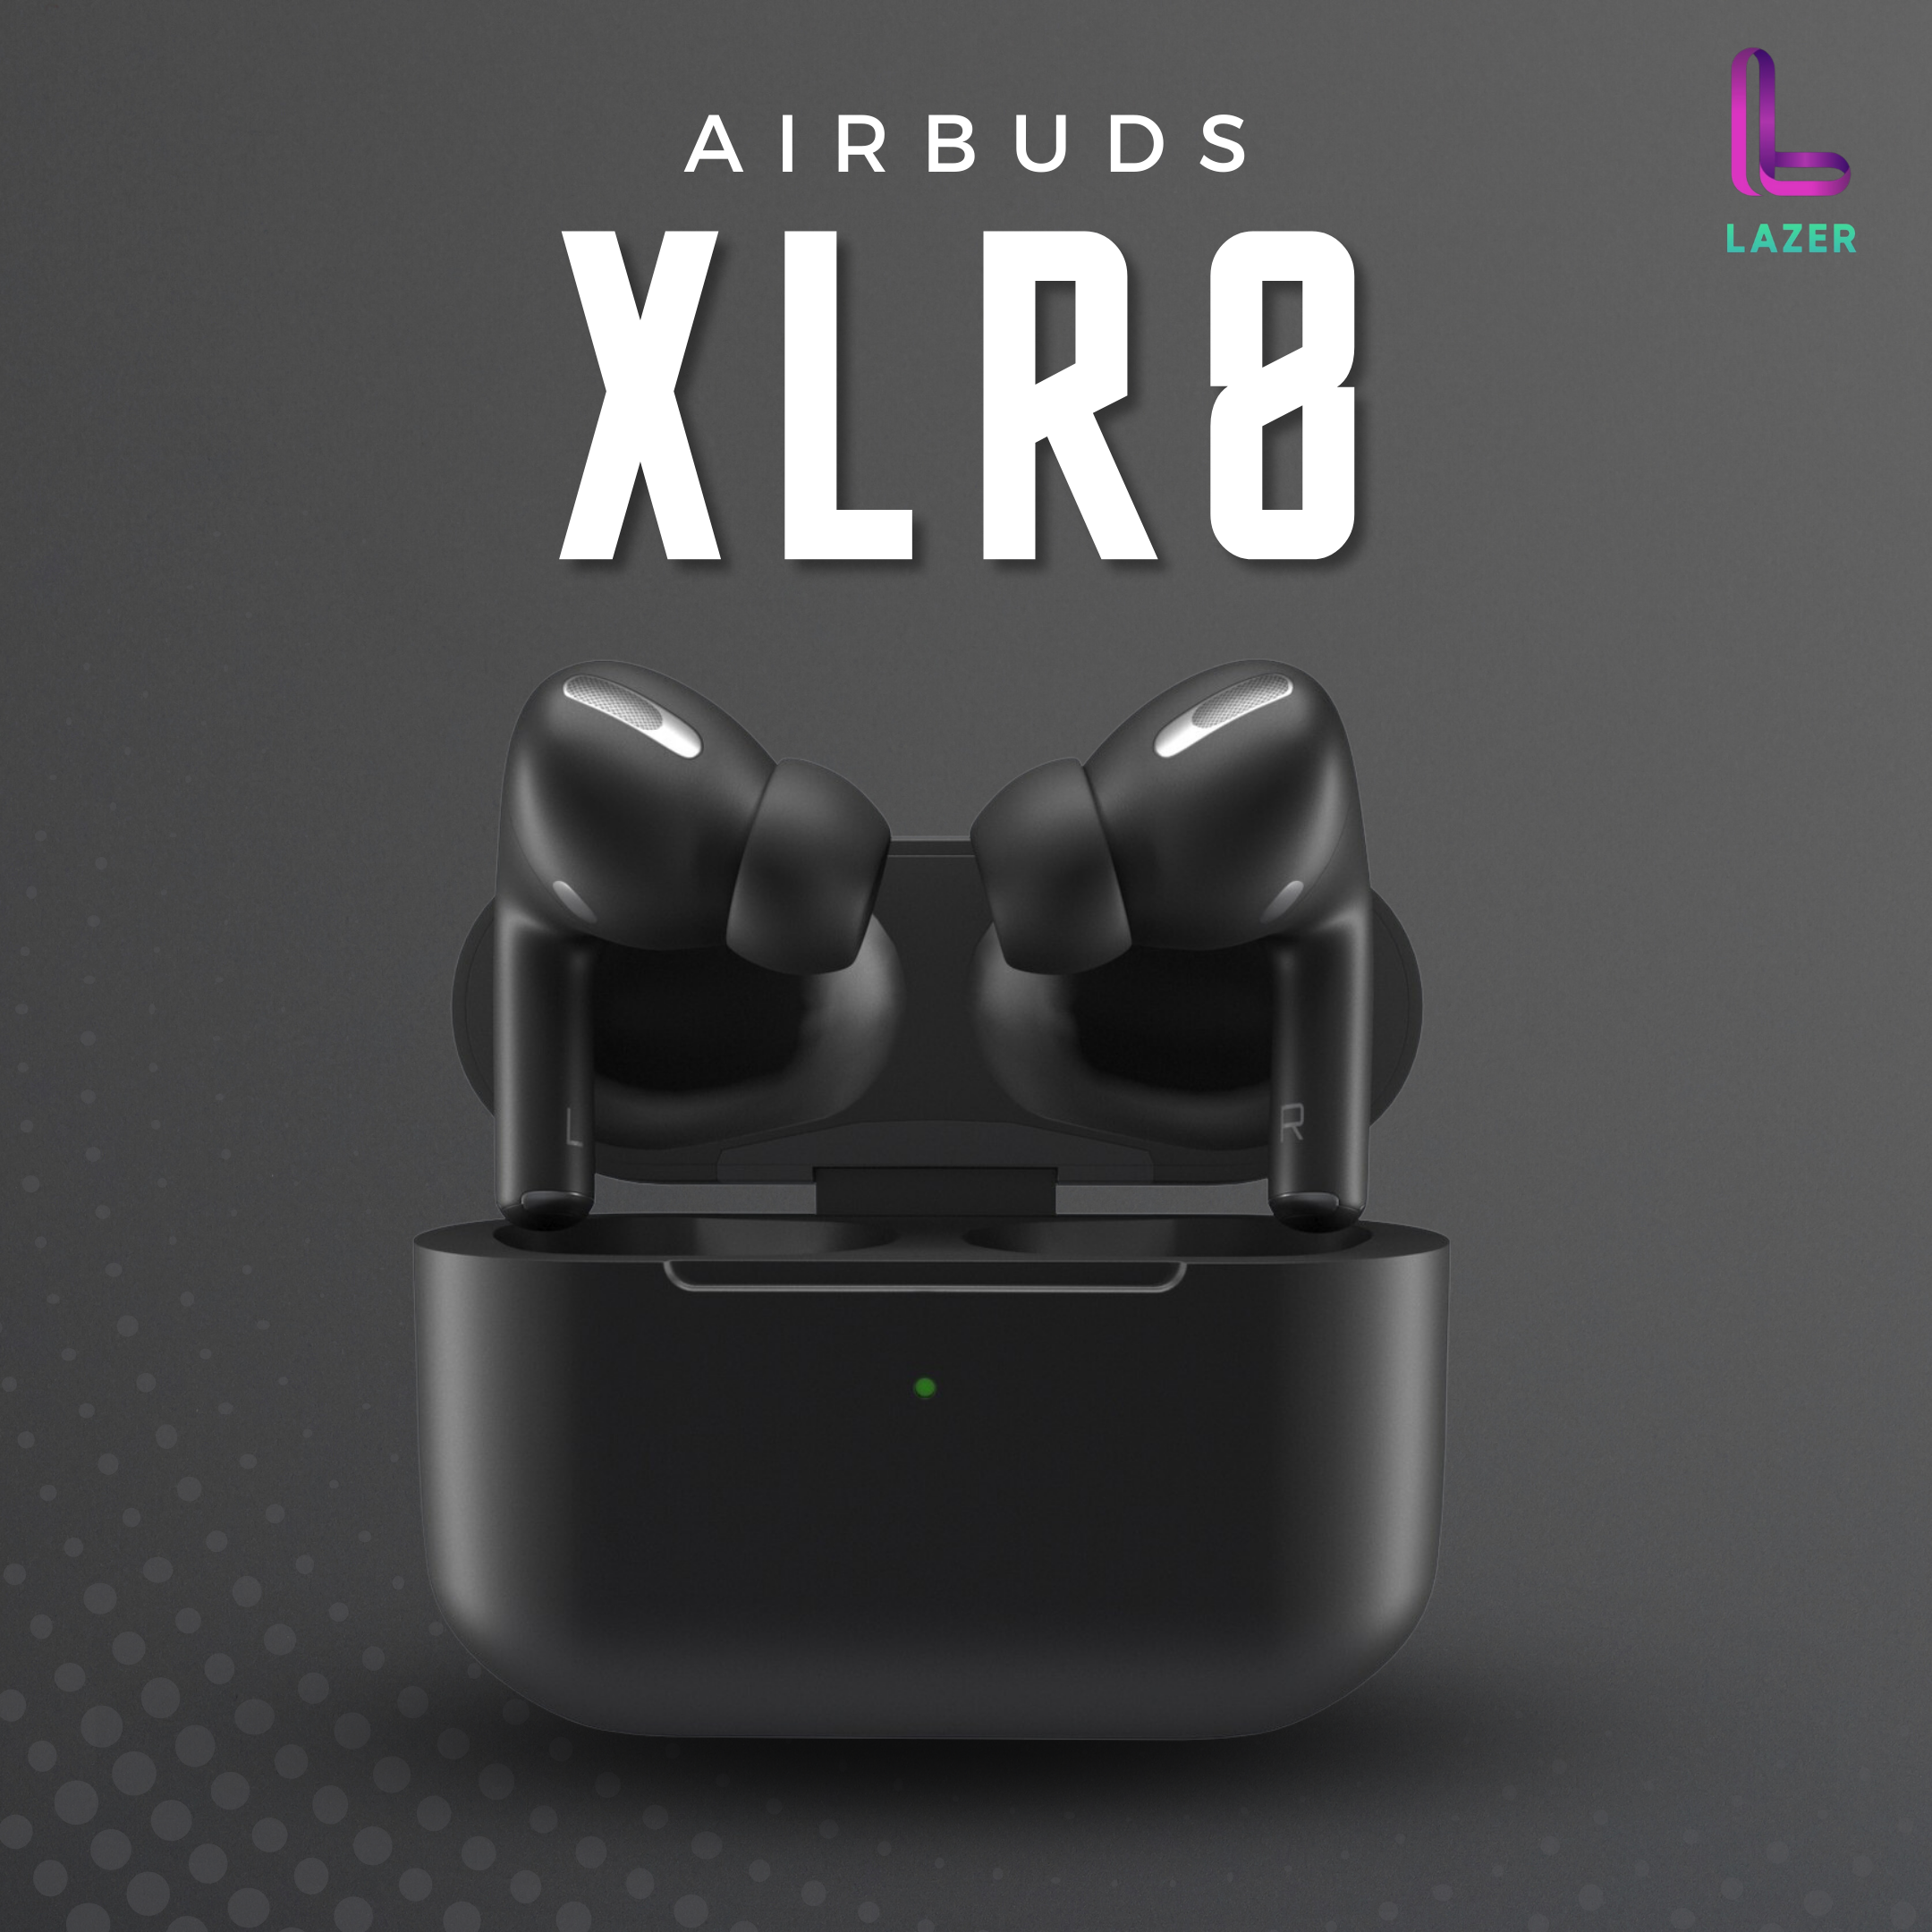 Lazer Airbuds XLR8